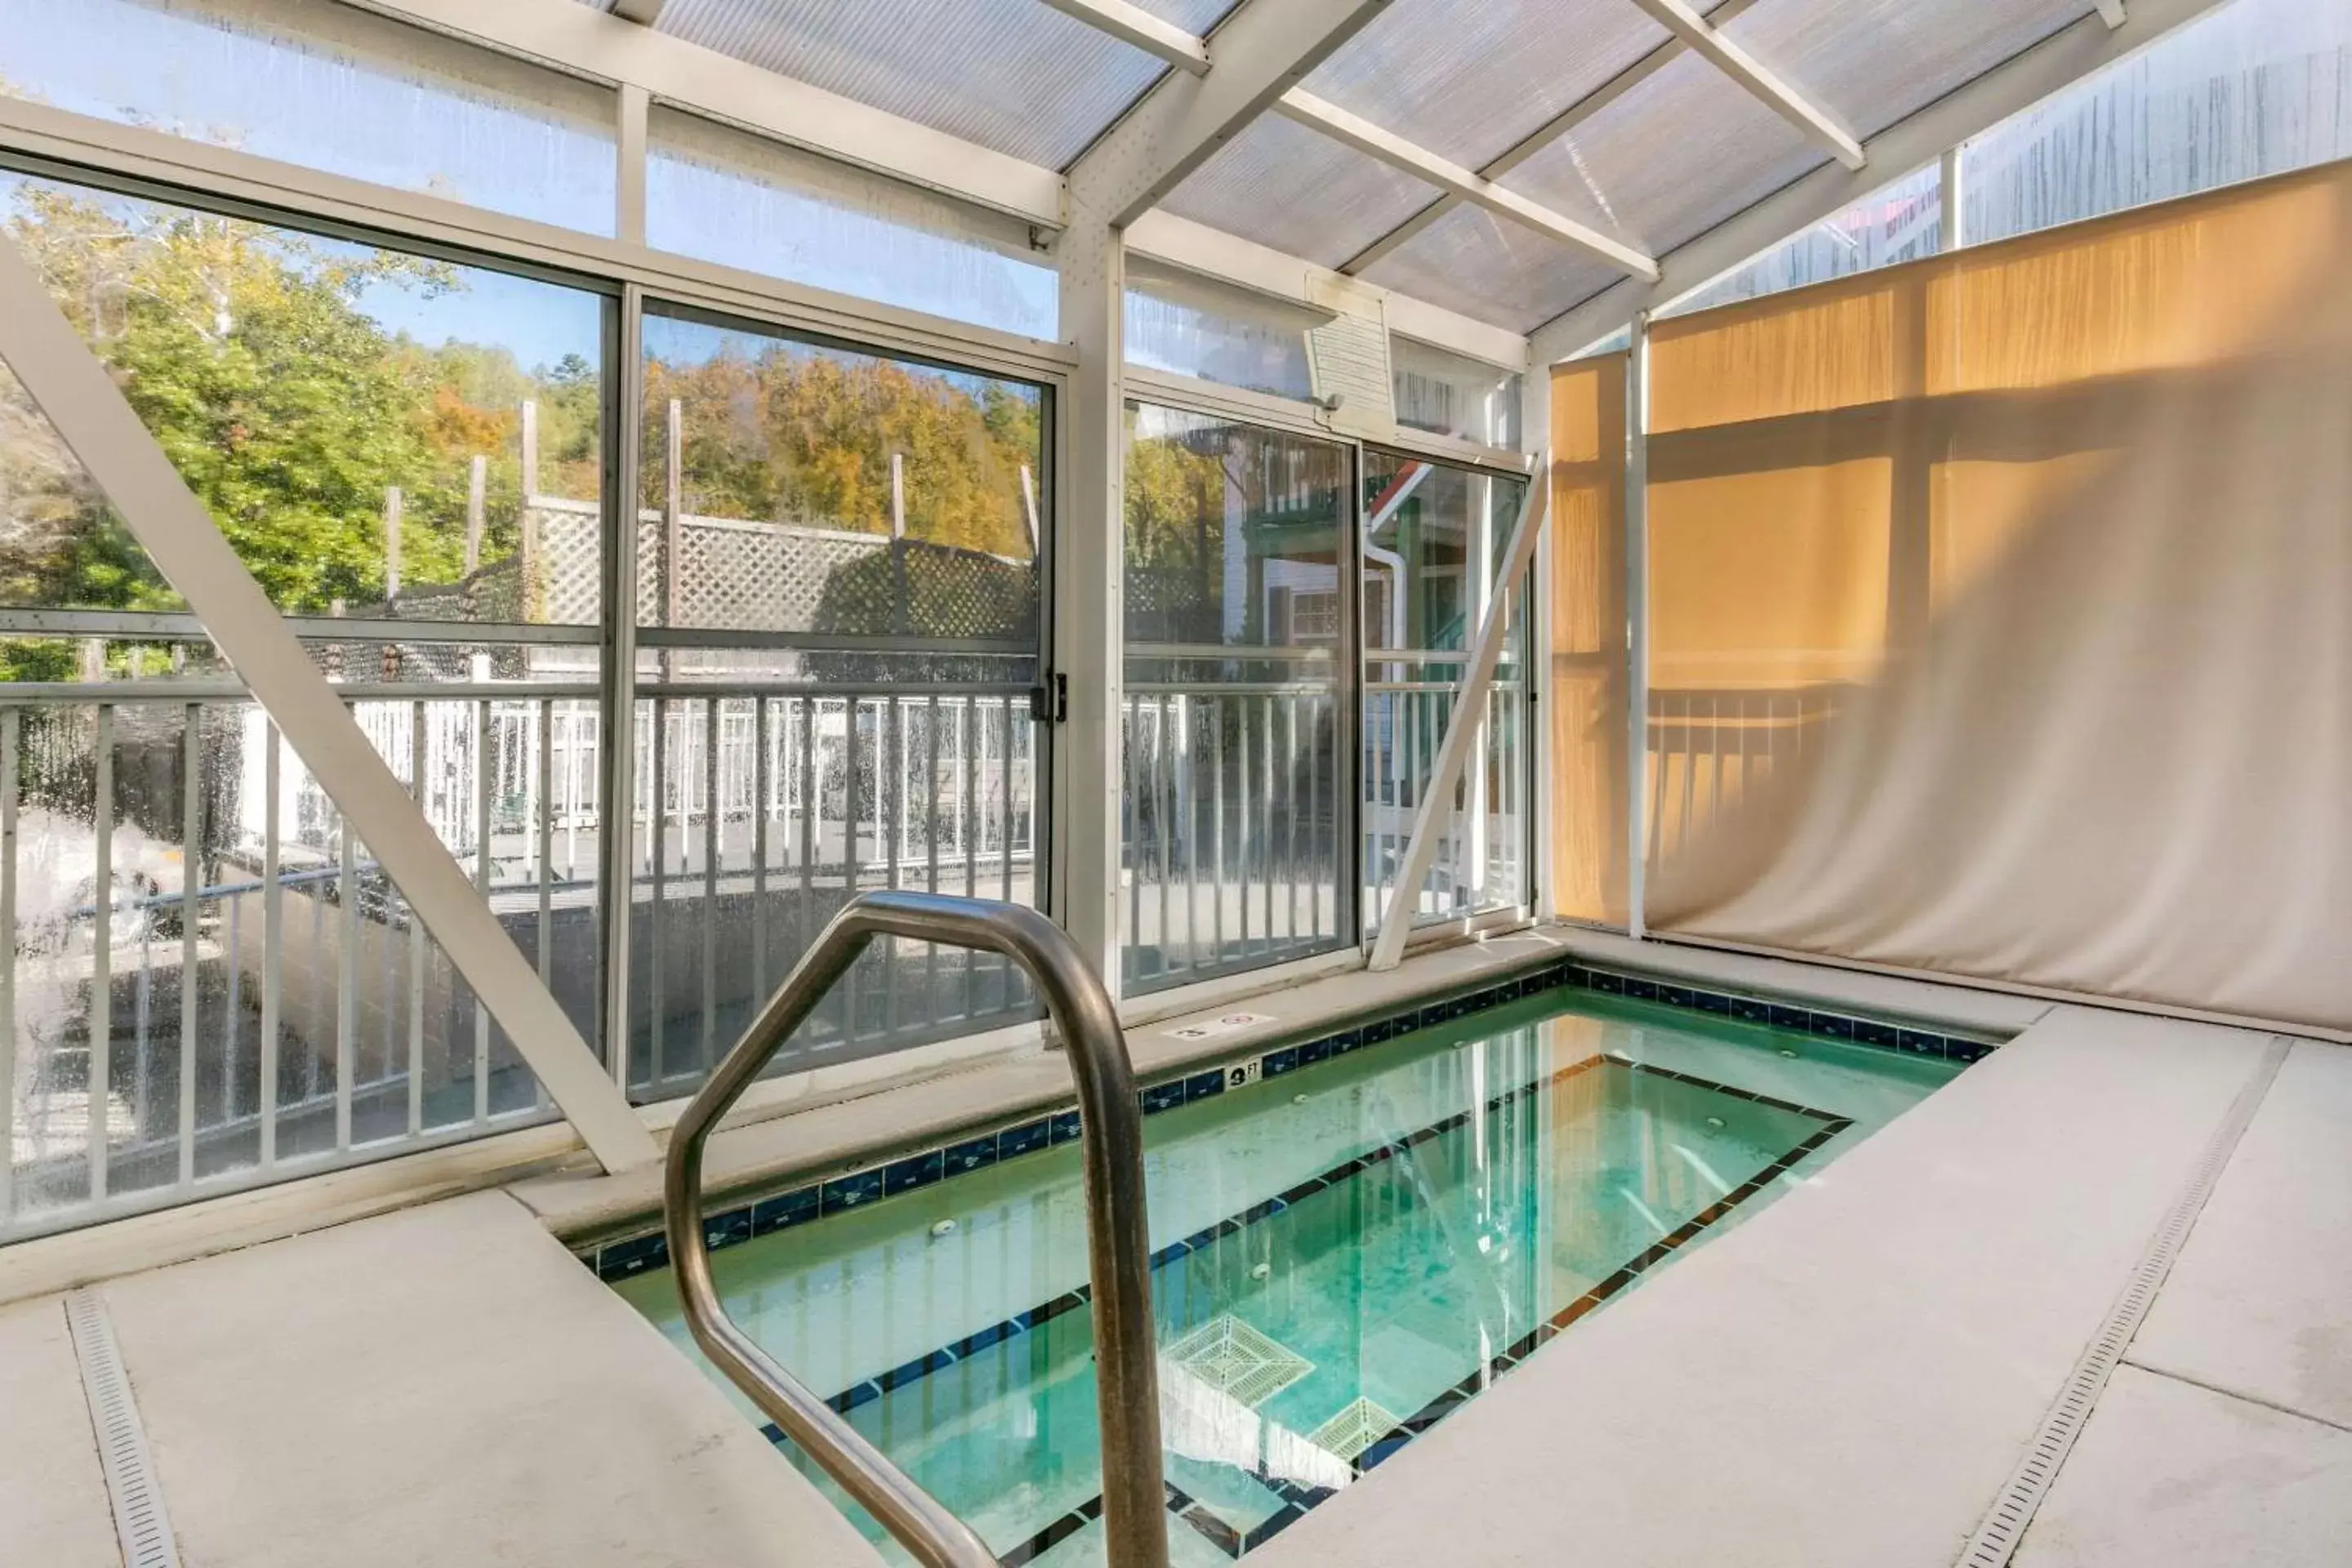 Hot Tub, Swimming Pool in Sleep Inn & Suites near Sports World Blvd